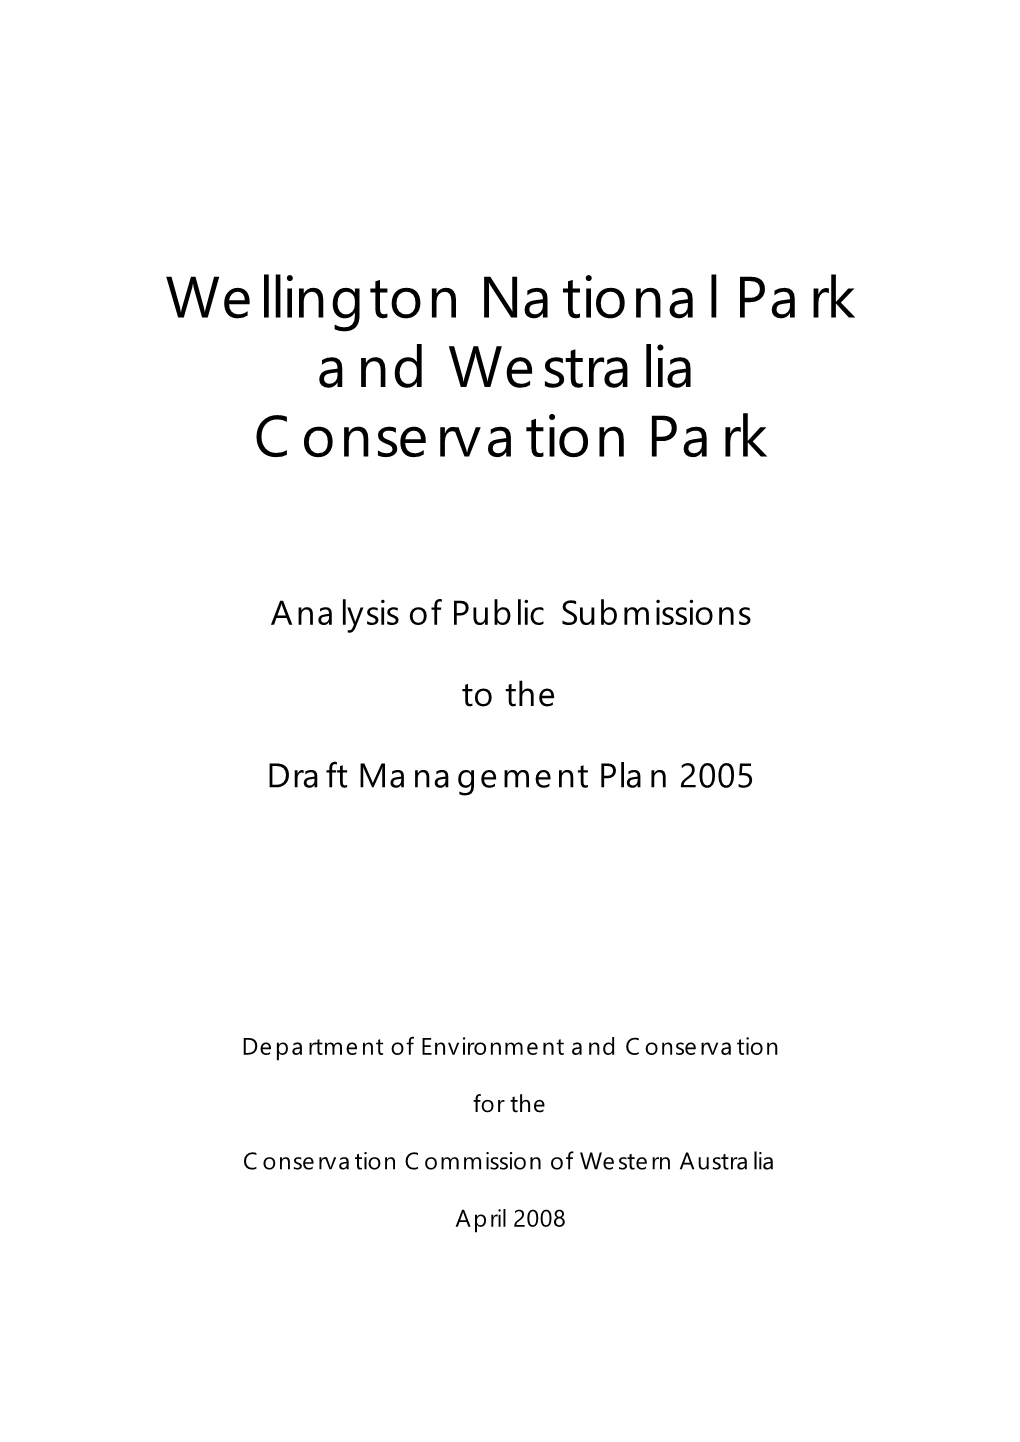 Wellington National Park and Westralia Conservation Park